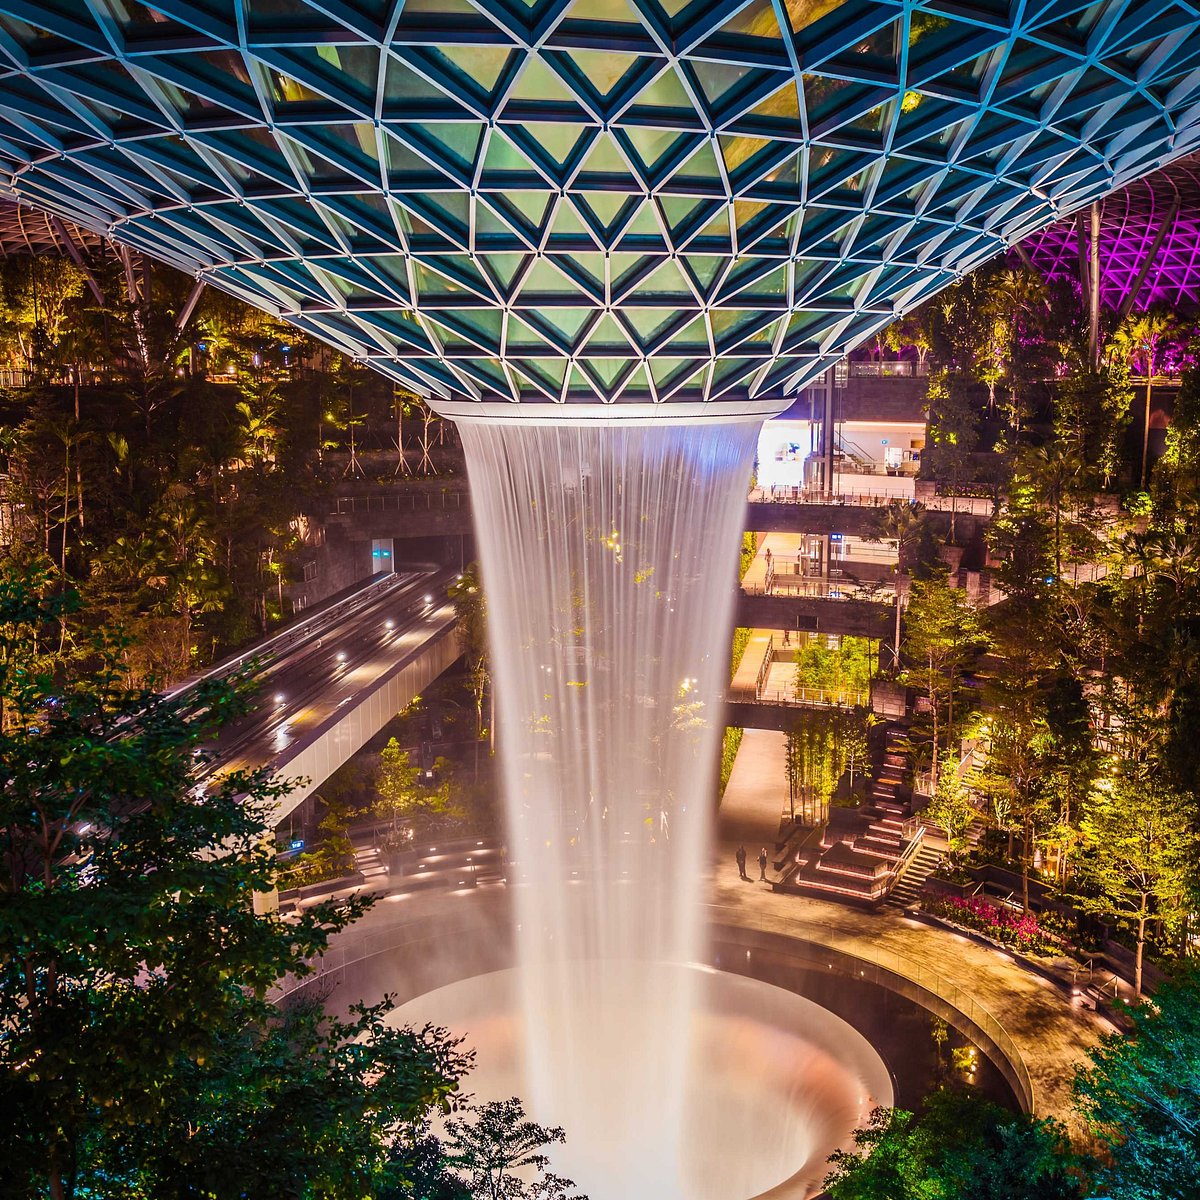 Singapore Changi Airport Jewel Indoor Rainforest